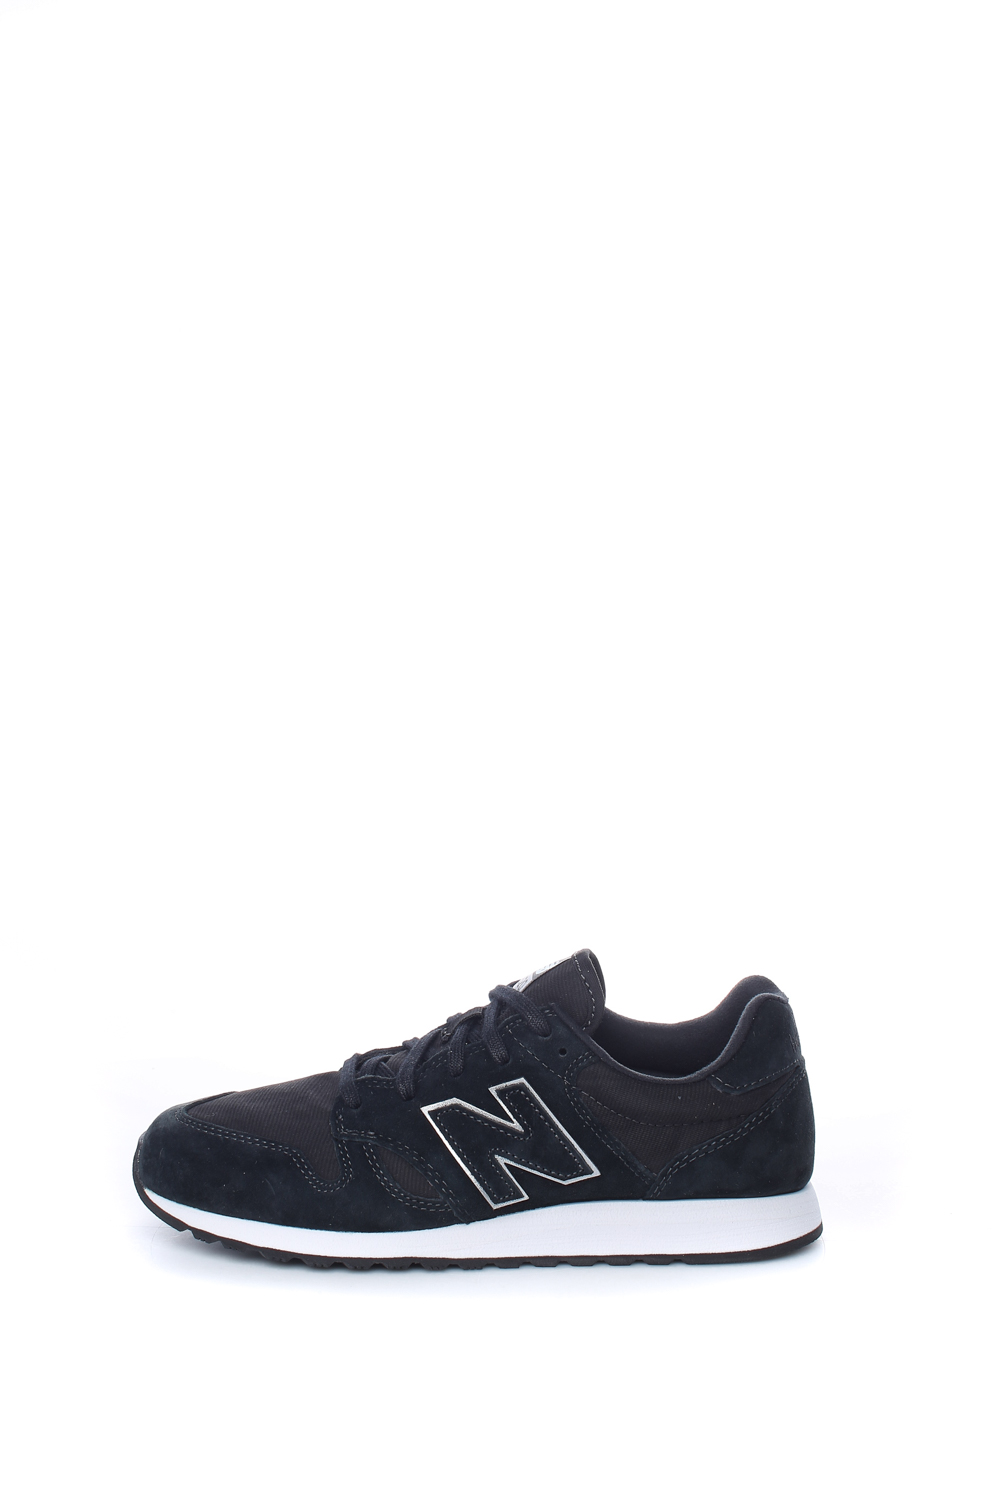 NEW BALANCE – Γυναικεια sneakers New Balance 520 μαυρα